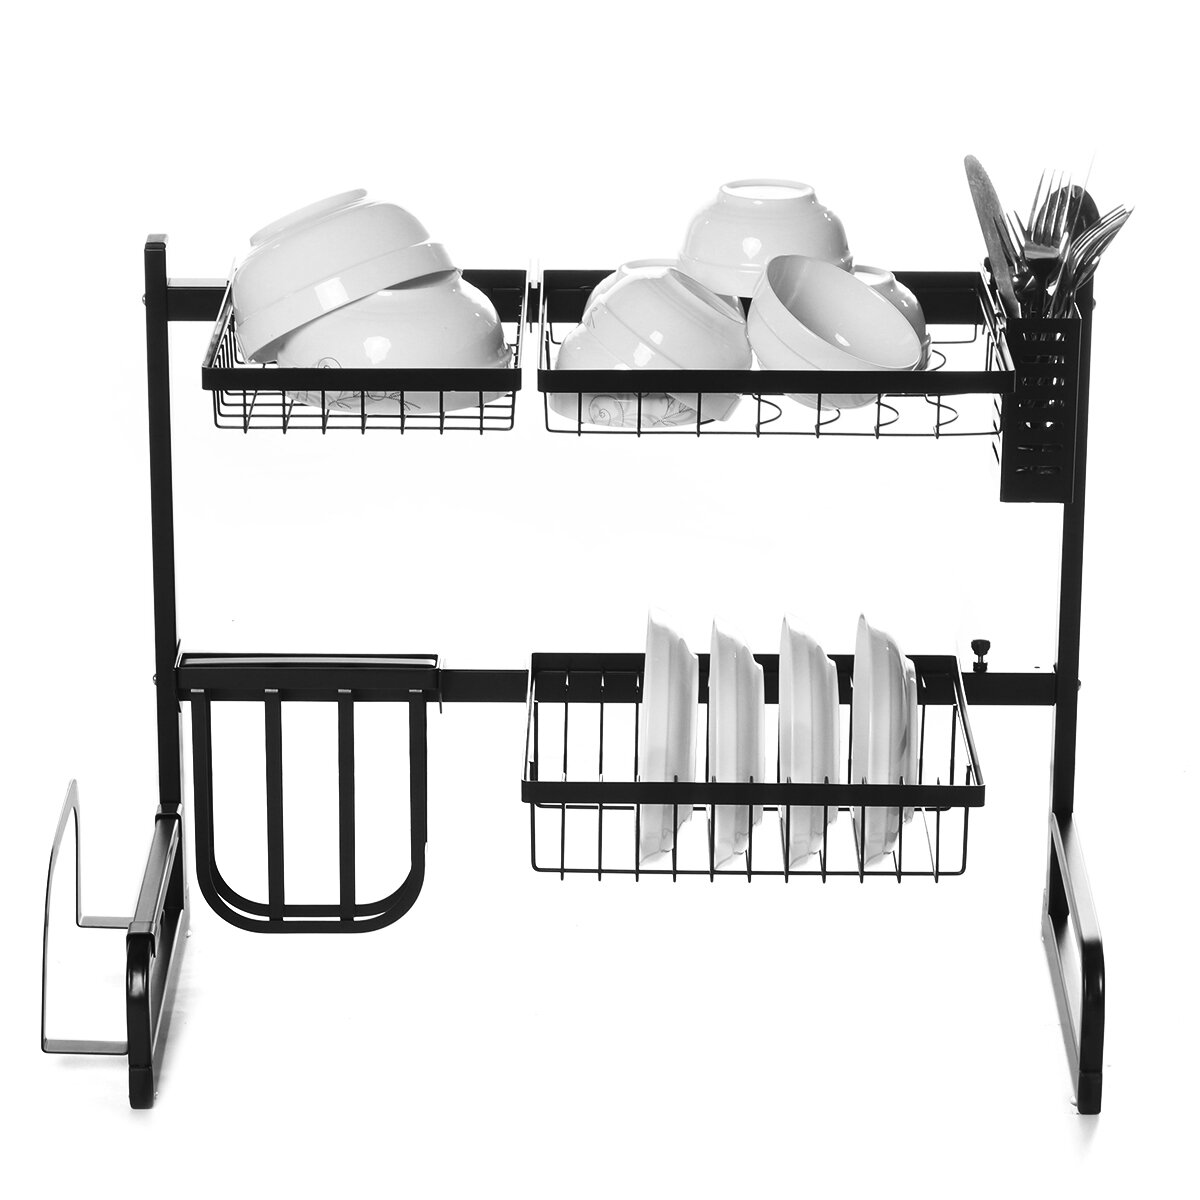 Image of Iron Art Retractable Storage Rack 63-93cm Carbon Steel Multifunctional Dish Rack Kitchen Accessories Organizer